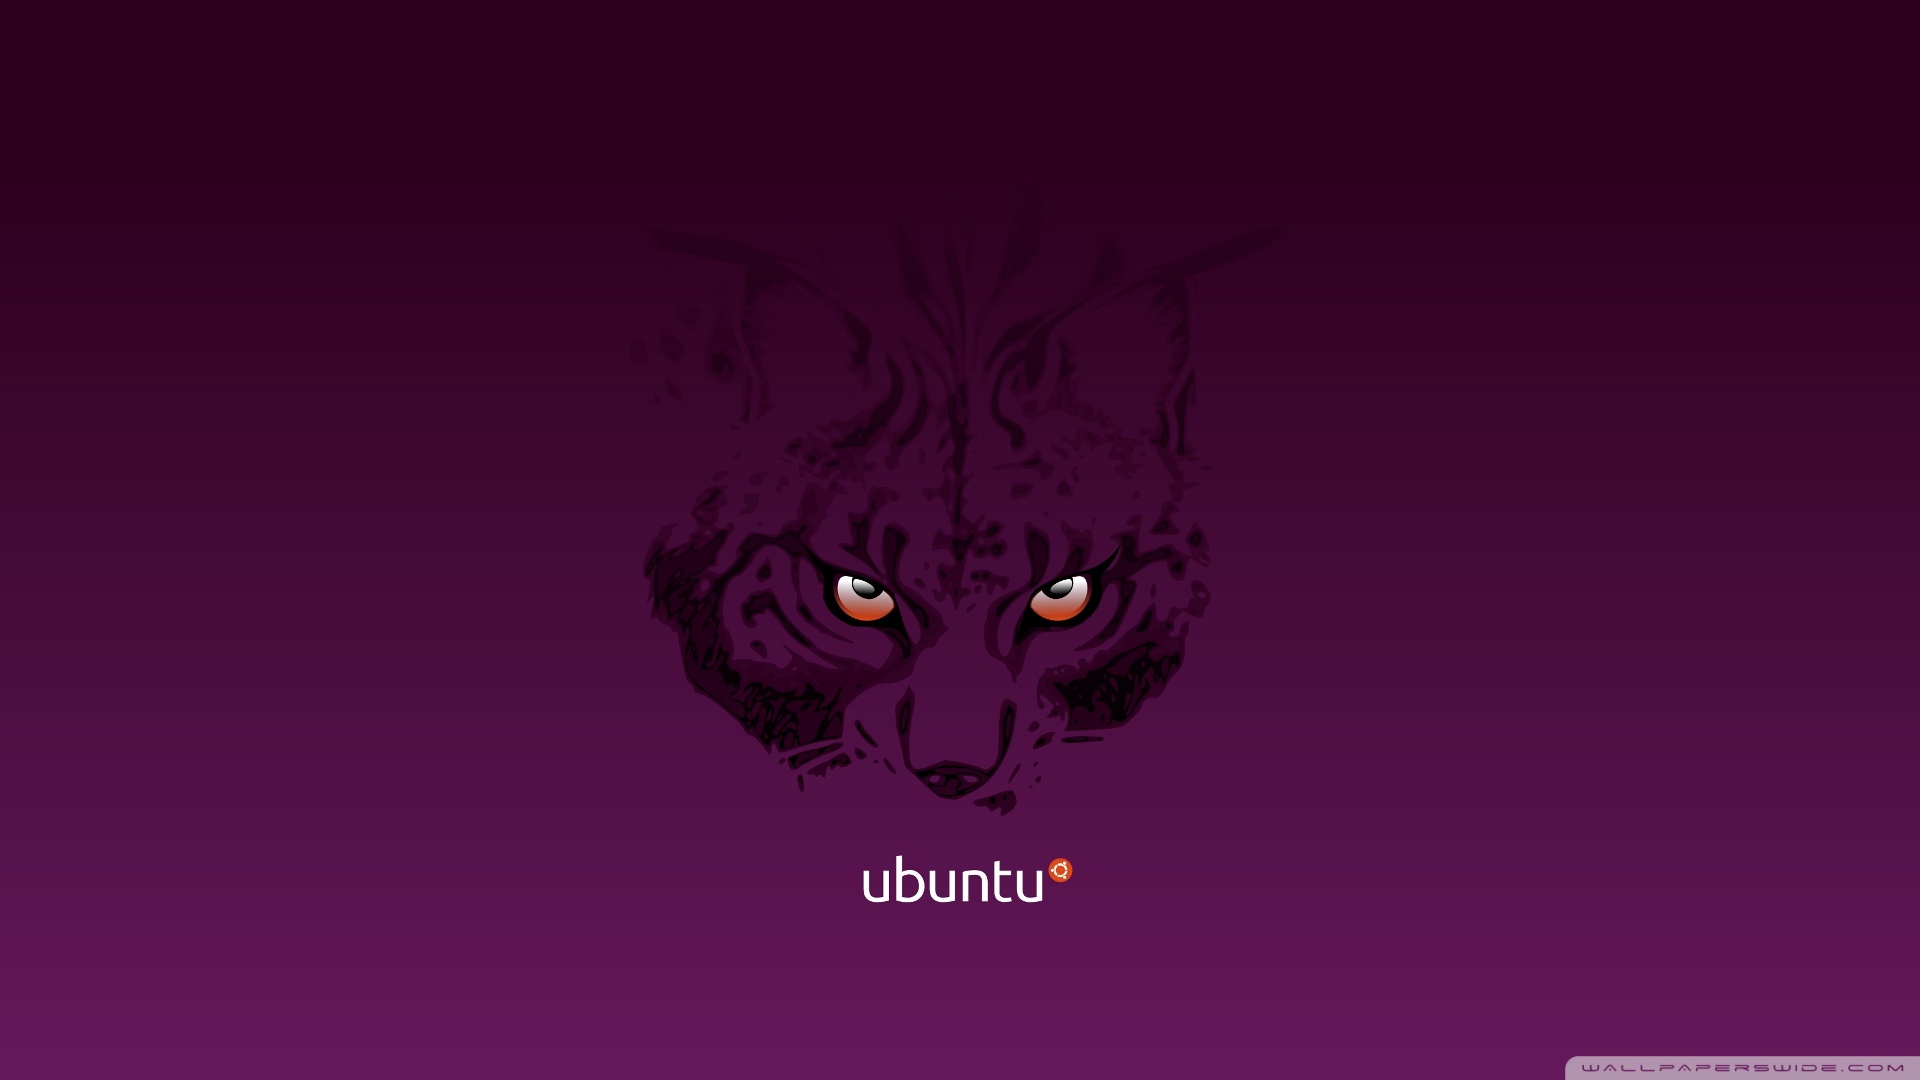 ubuntu on virtualmachine stuck on wallpaper